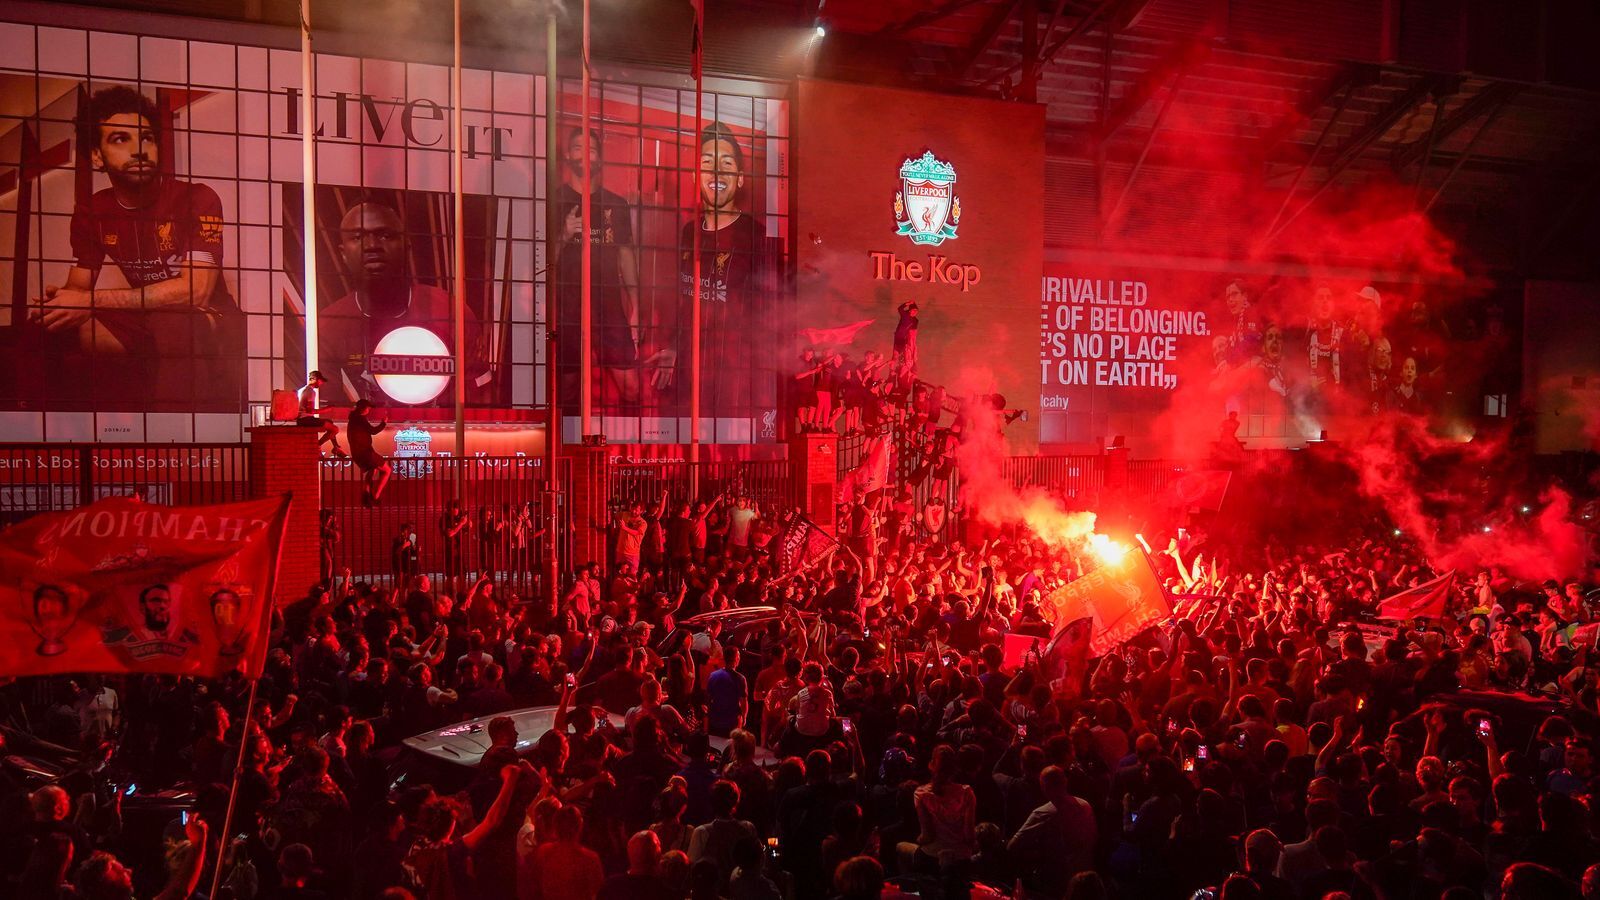 Jürgen Klopp request Liverpool fans to celebrate safely